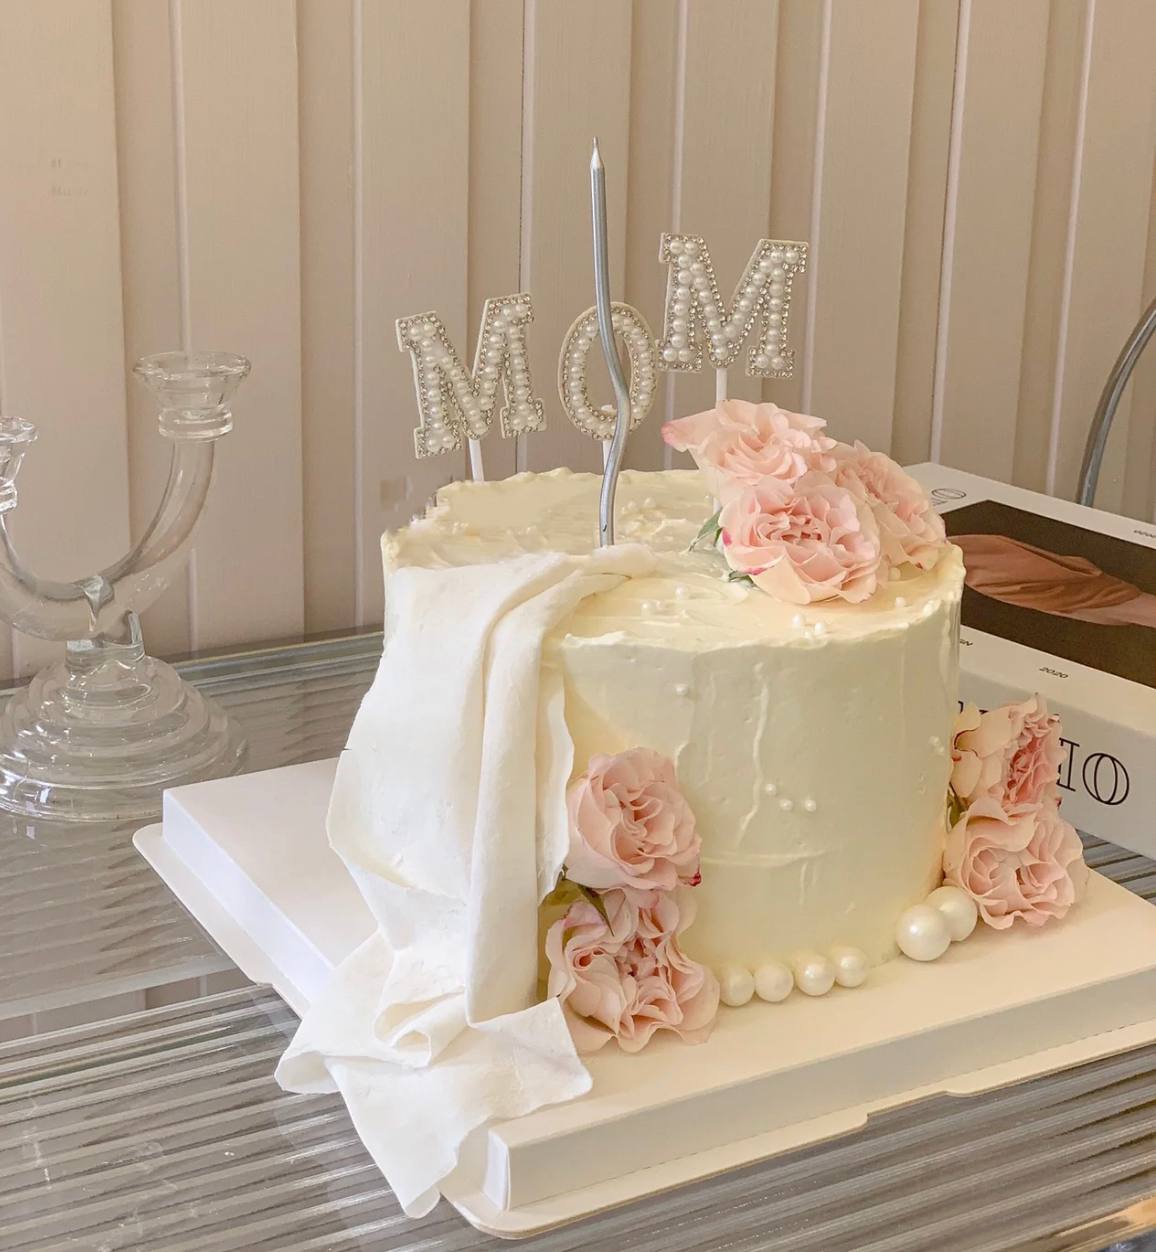 Happy Birthday Mom - Decorated Cake by Chris Jones - CakesDecor